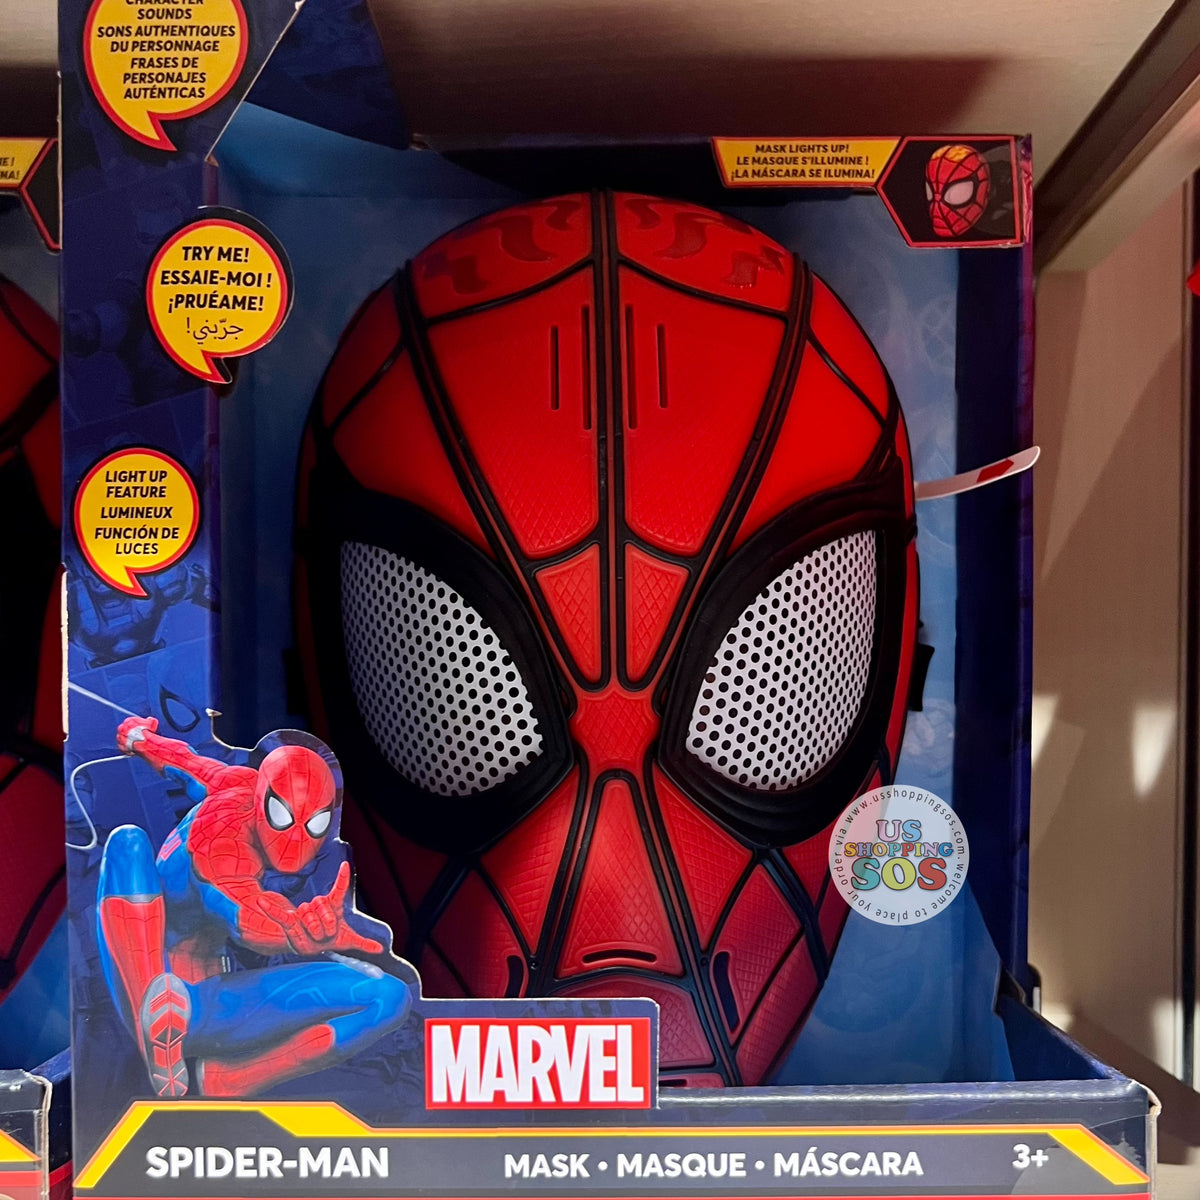 Marvel Spiderman Talking Electronic Halloween Mask Lights Up Says